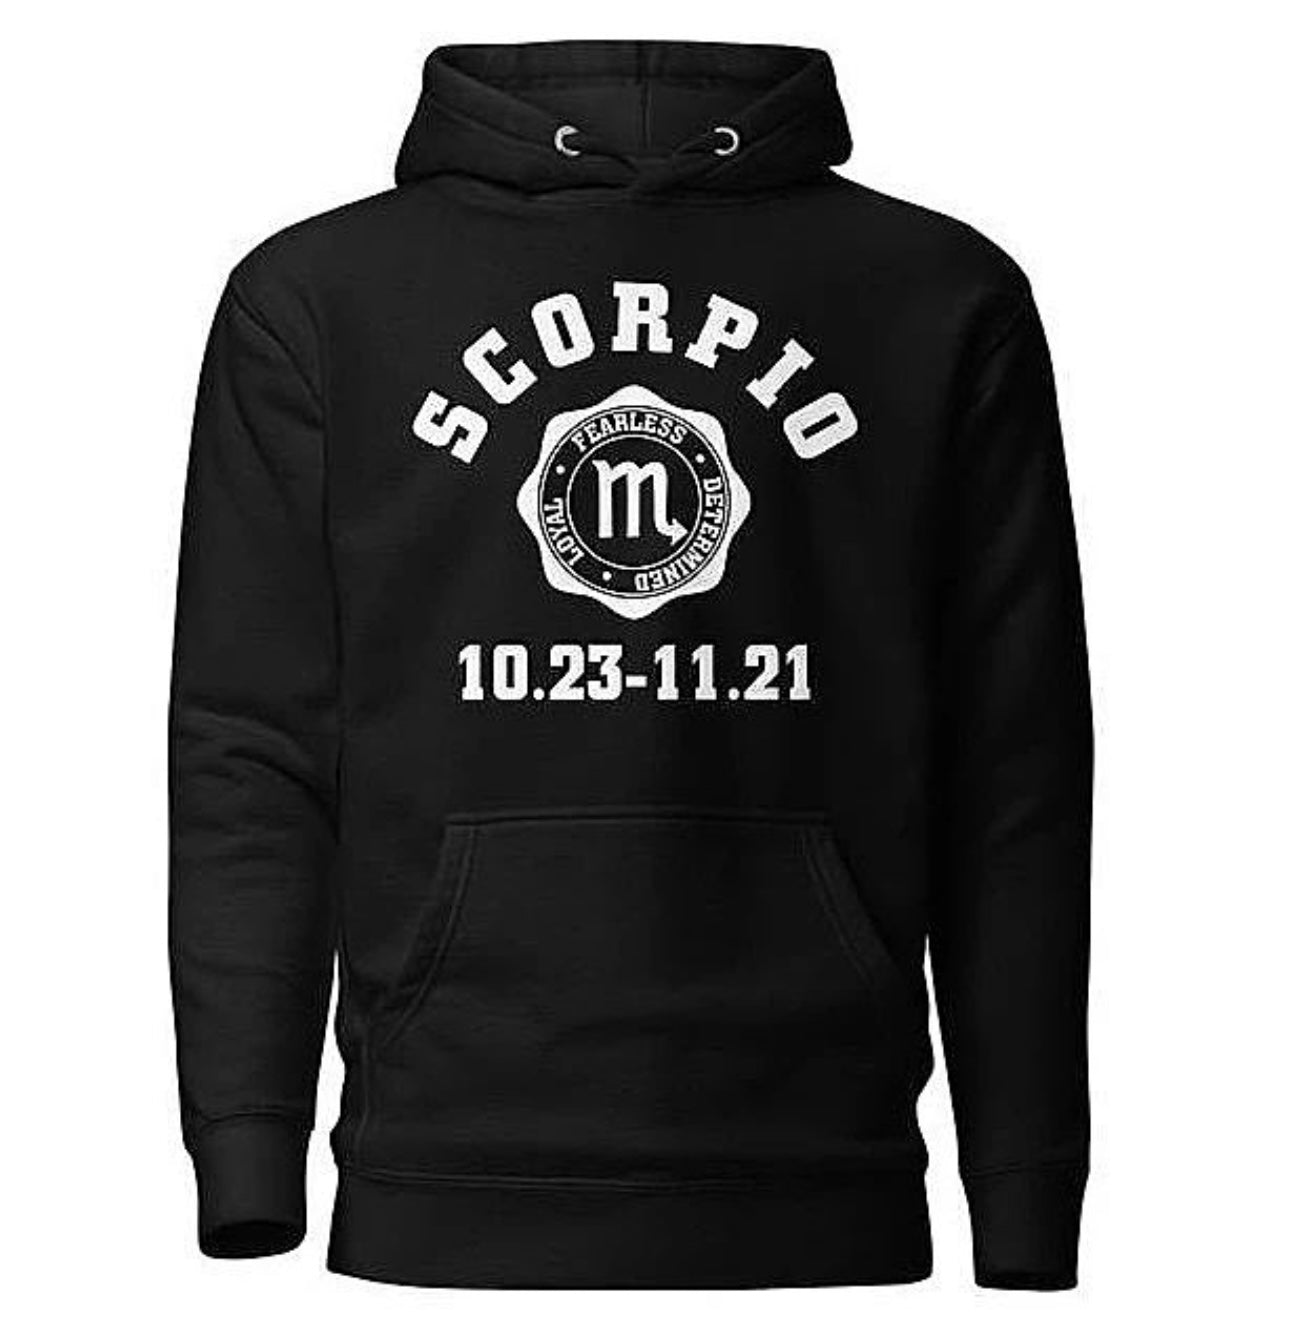 Scorpio hoodie